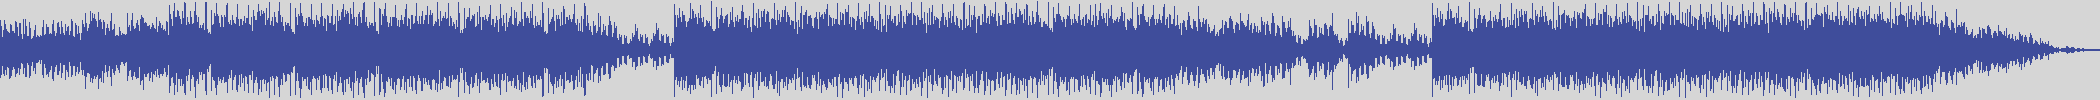 noclouds_chillout [NOC116] Reverbtime - Beautiful You [Original Mix] audio wave form